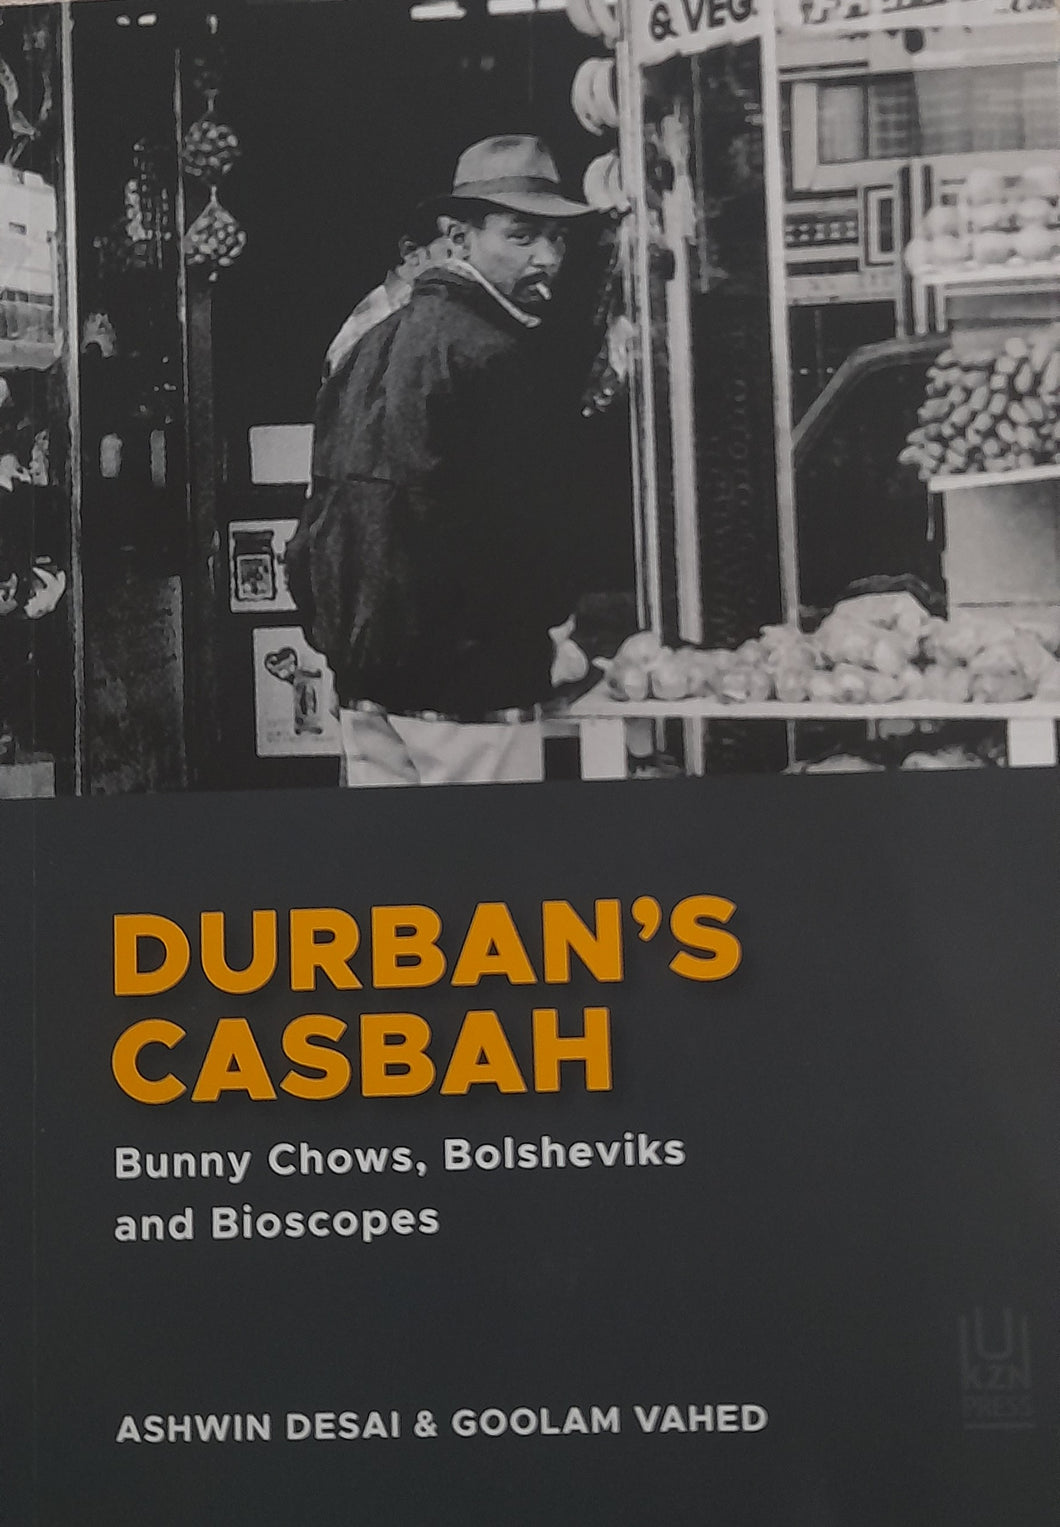 Durban's Casbah: Bunny Chows, Bolsheviks and Bioscopes - Ashwin Desai and Goolam Vahed